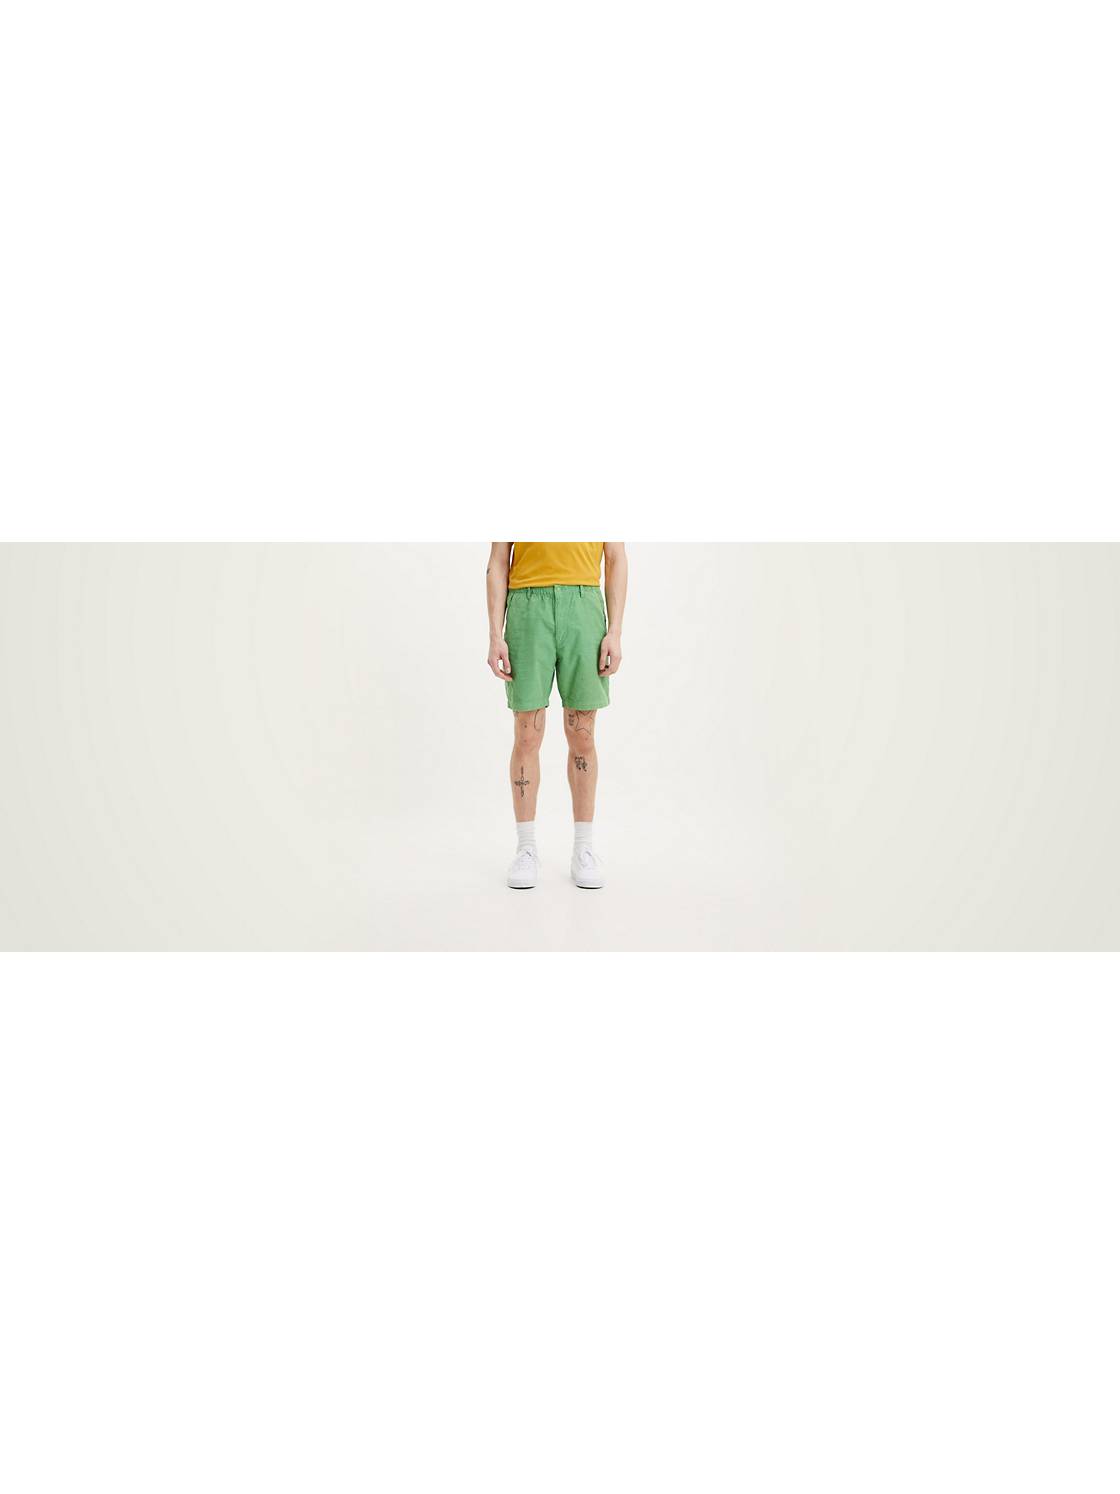 XX Chino EZ Corduroy Shorts 1